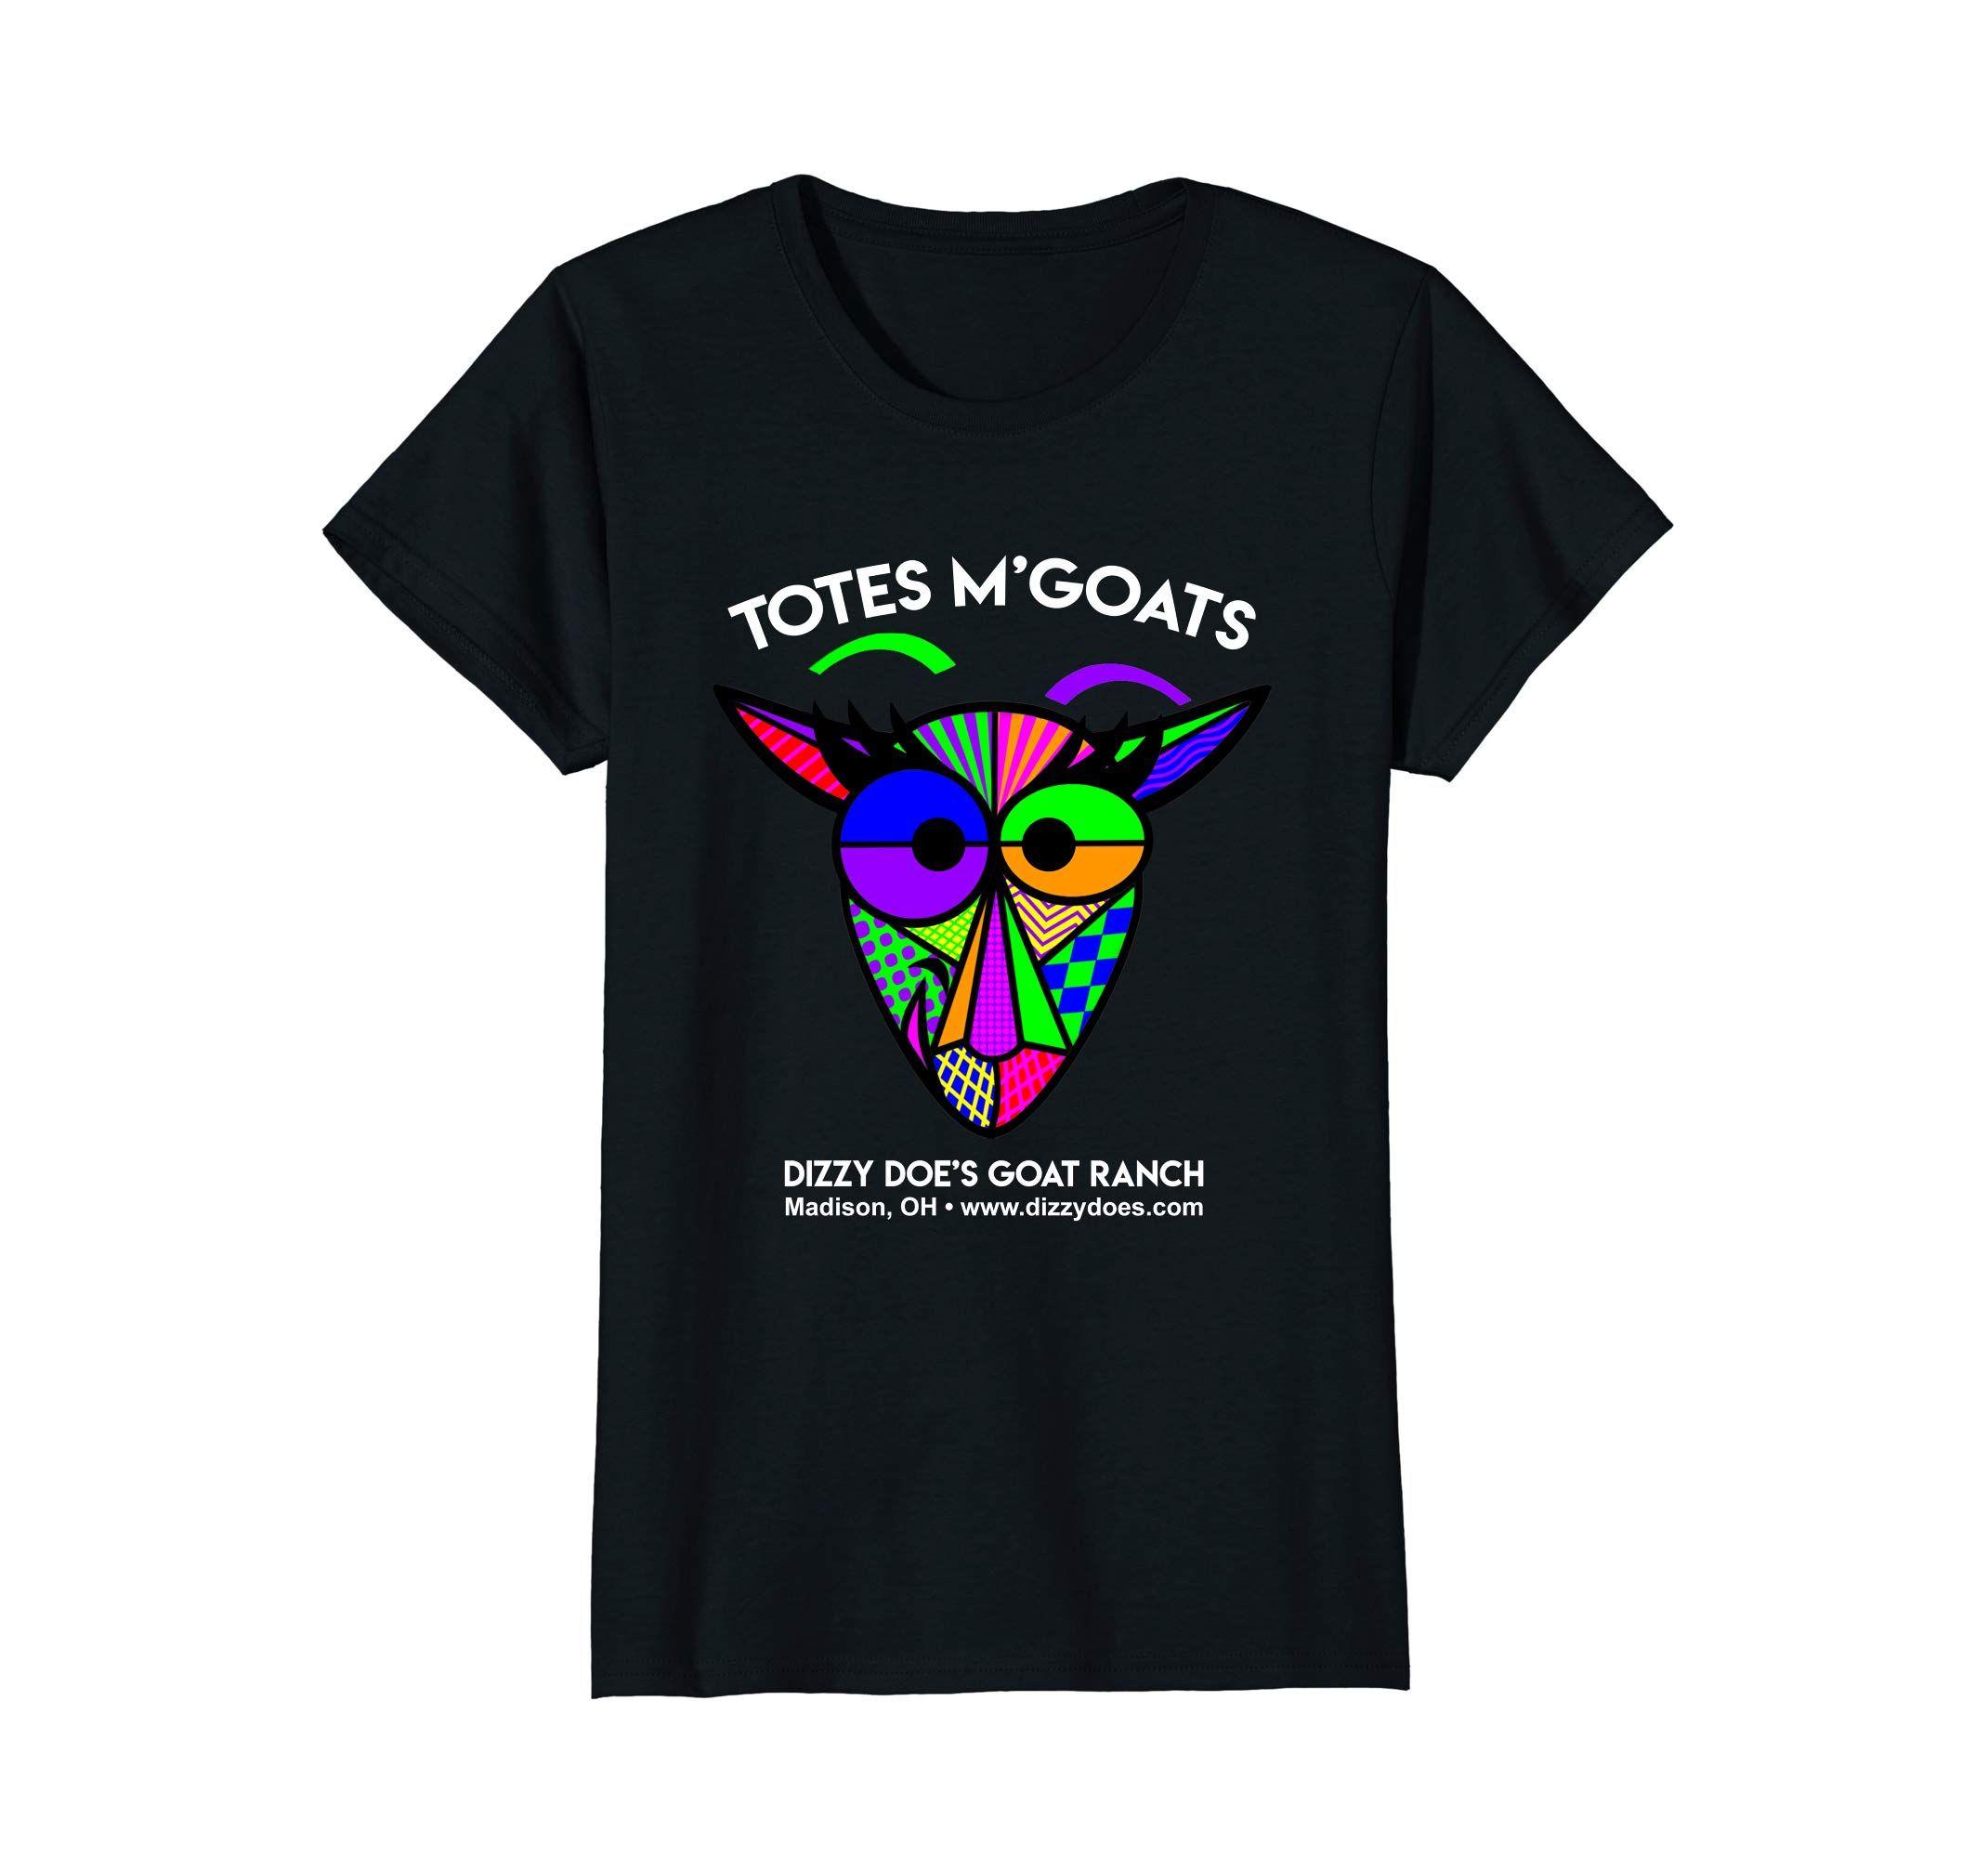 Cool Goat Logo - Amazon.com: Totes M'Goats Cool Goat T-Shirt: Clothing